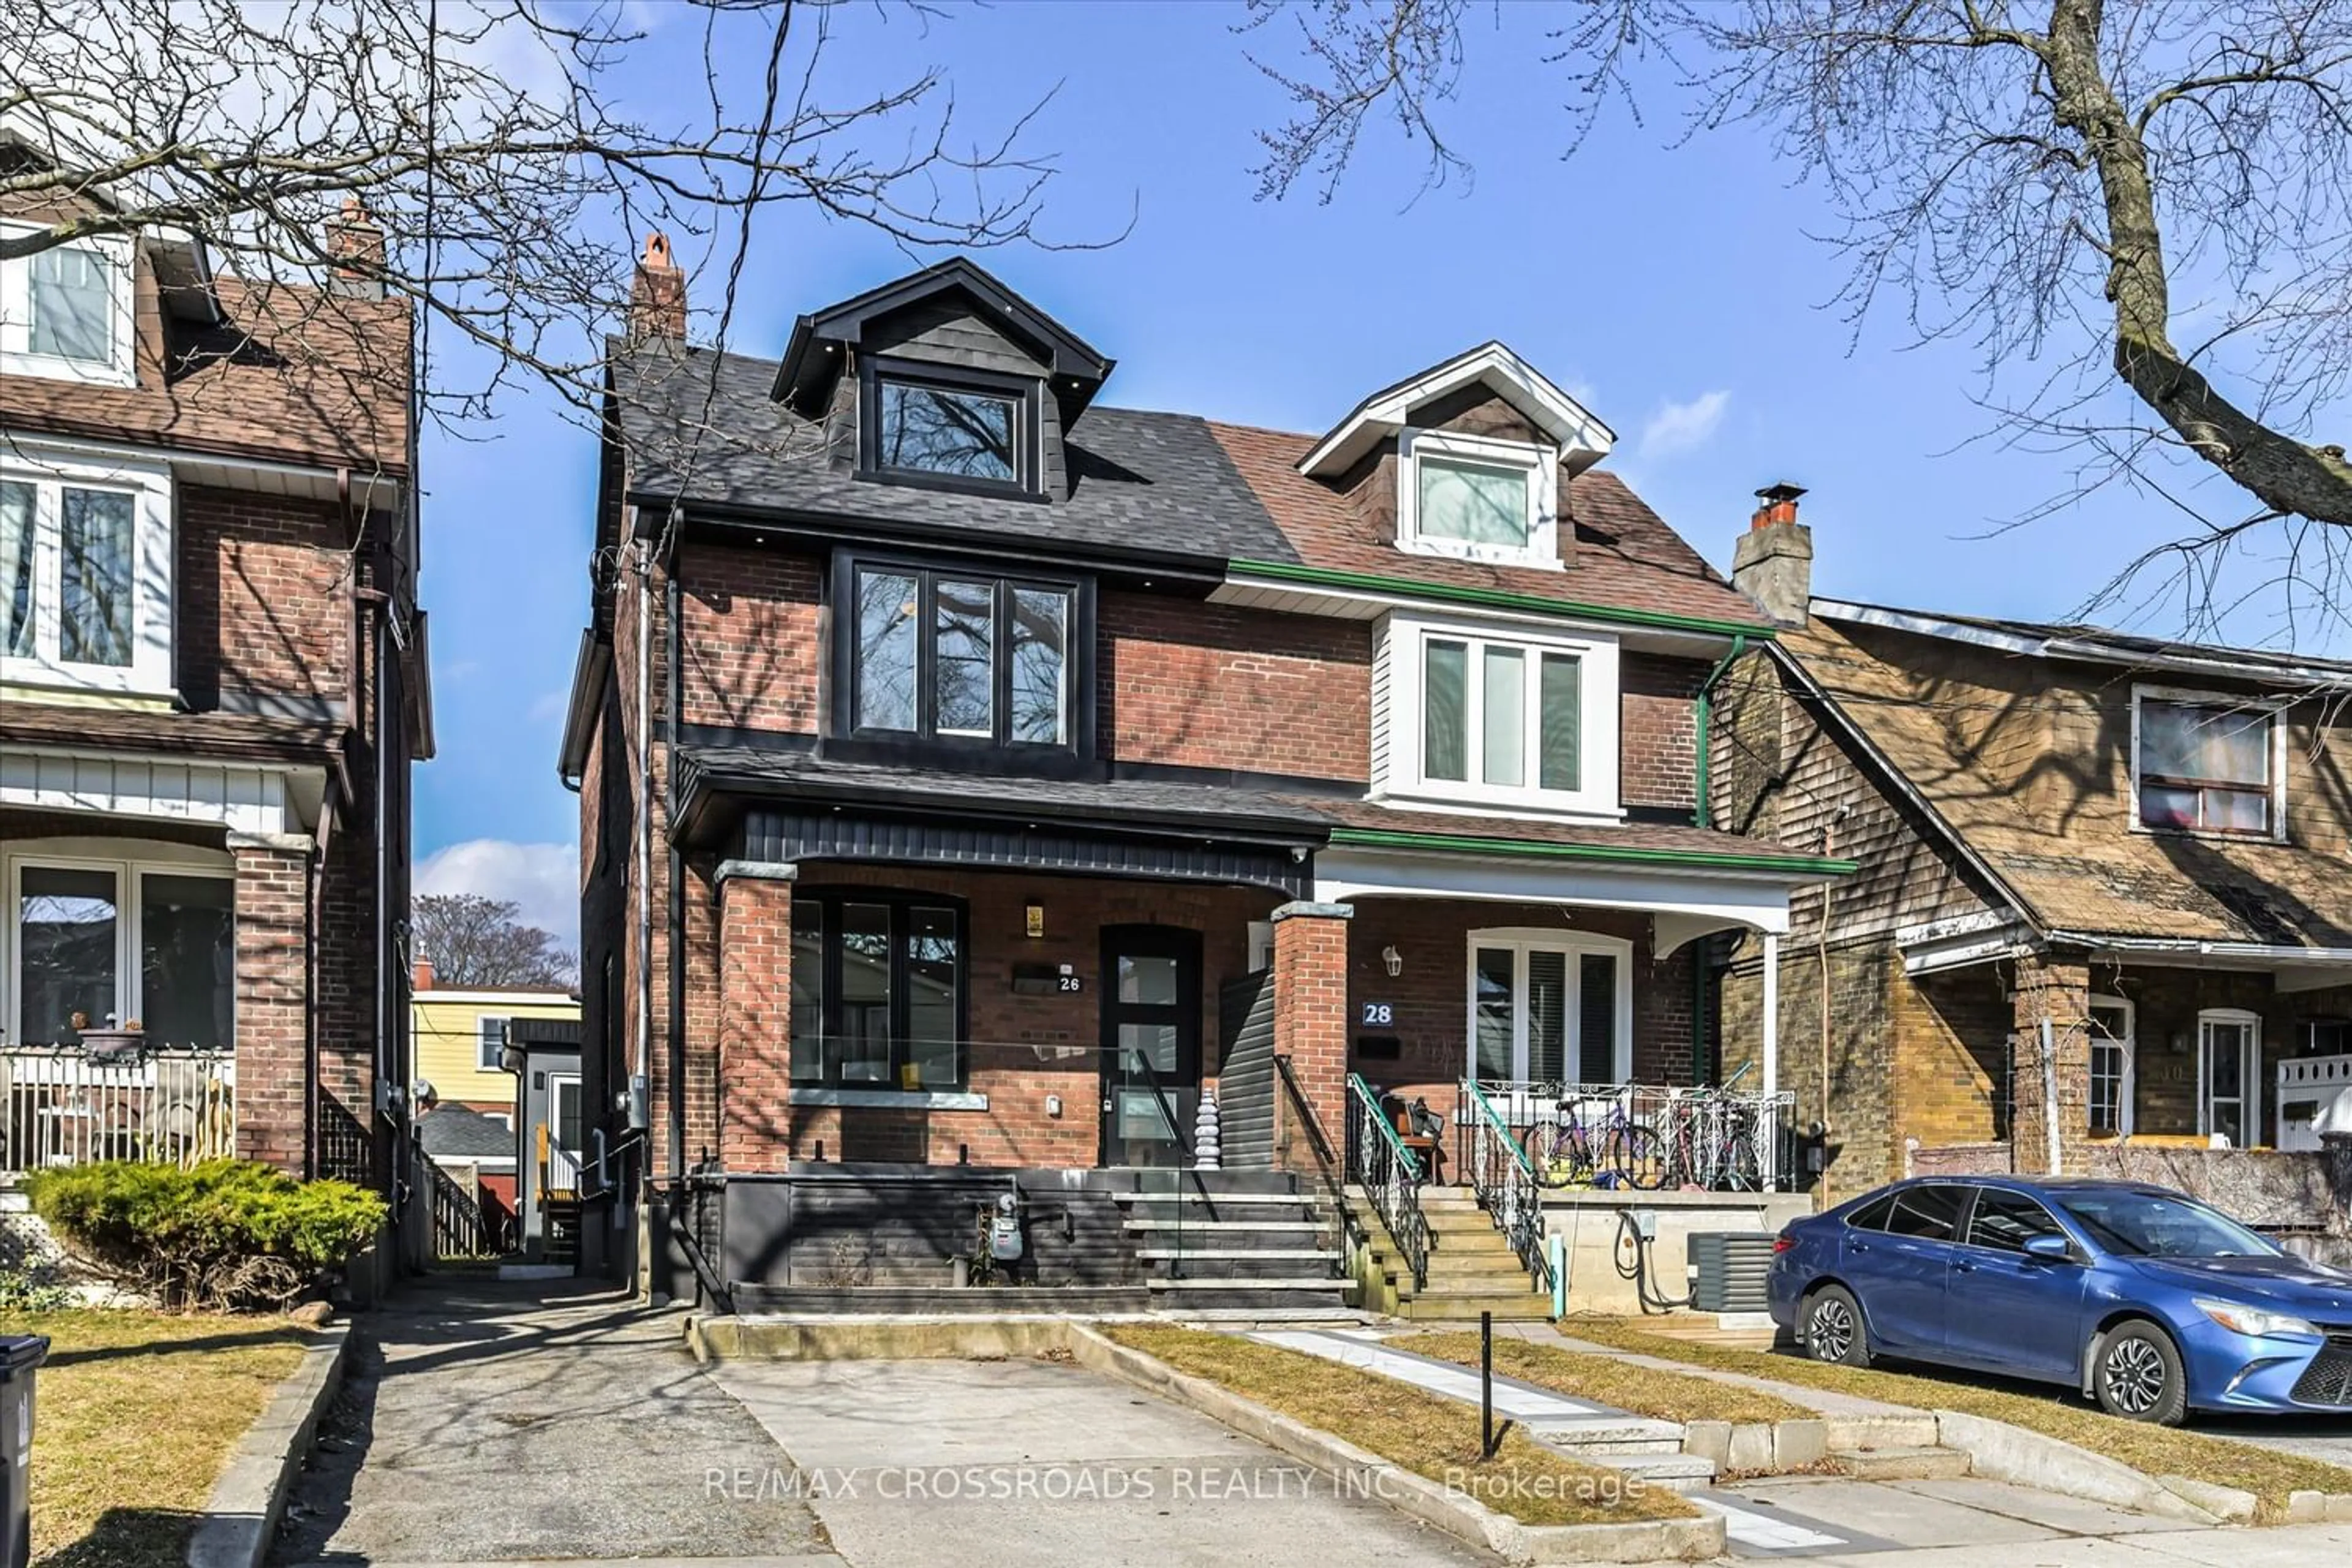 Home with brick exterior material for 26 Glebeholme Blvd, Toronto Ontario M4J 1S4